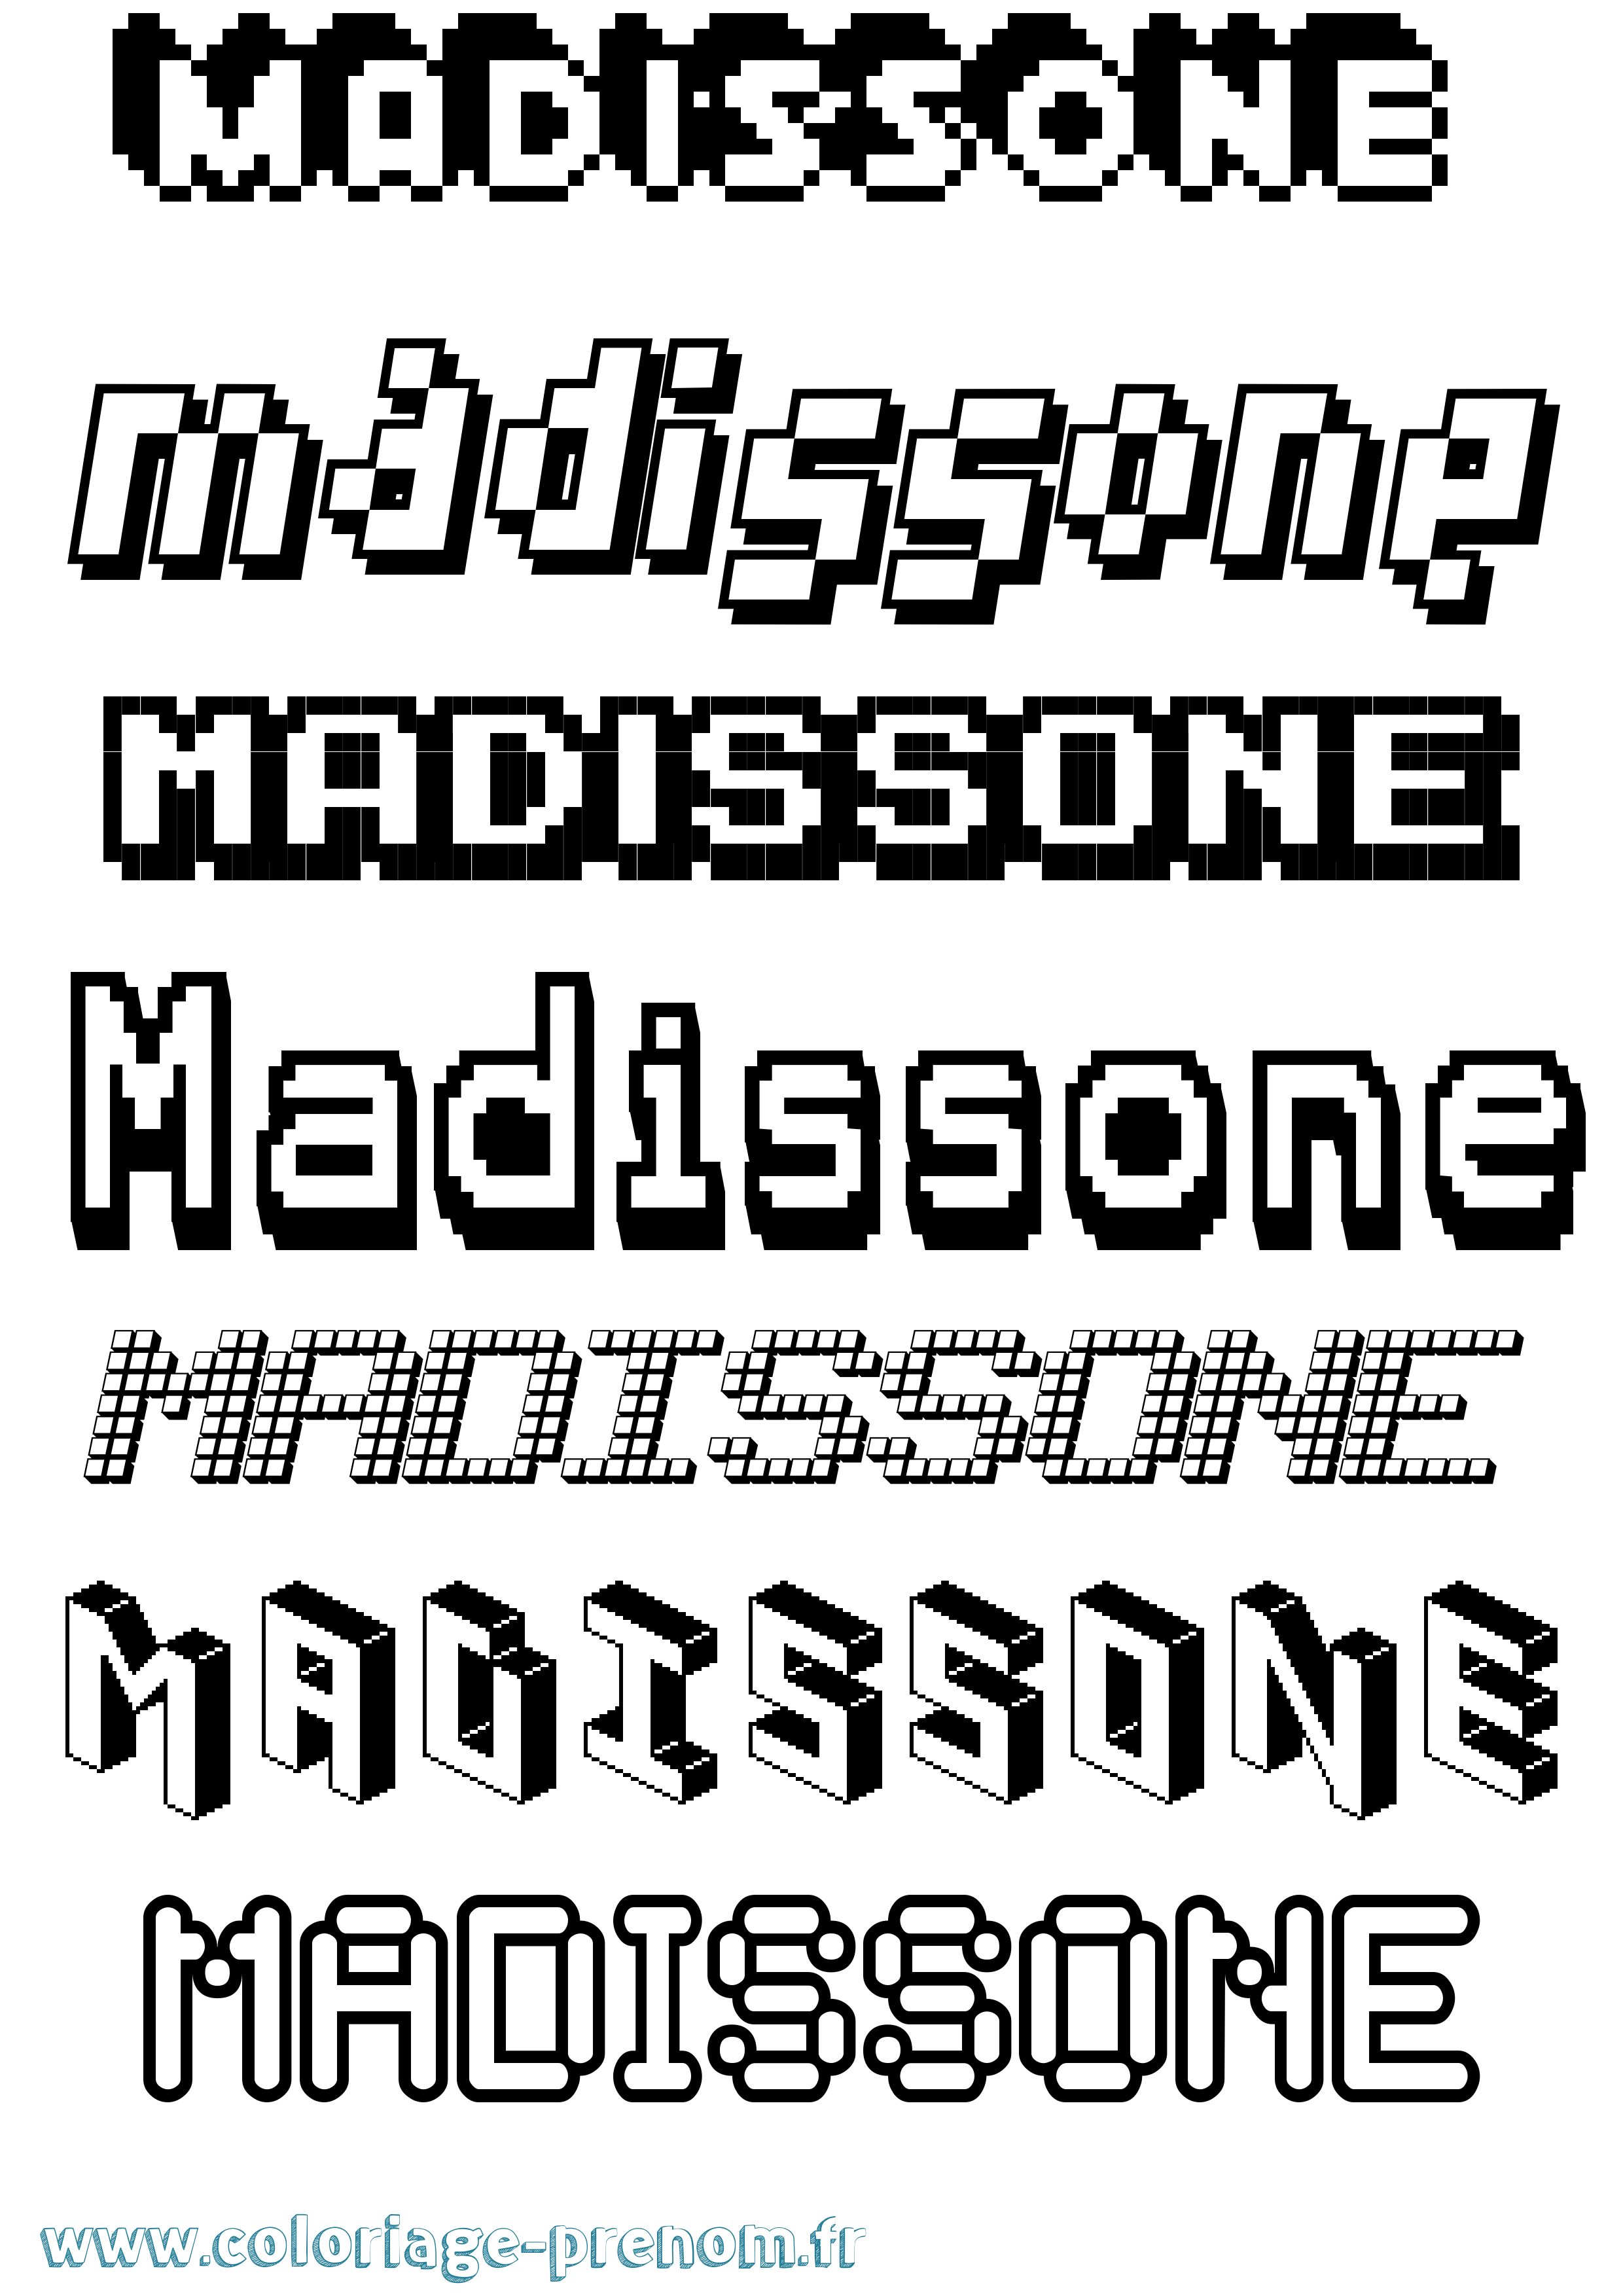 Coloriage prénom Madissone Pixel